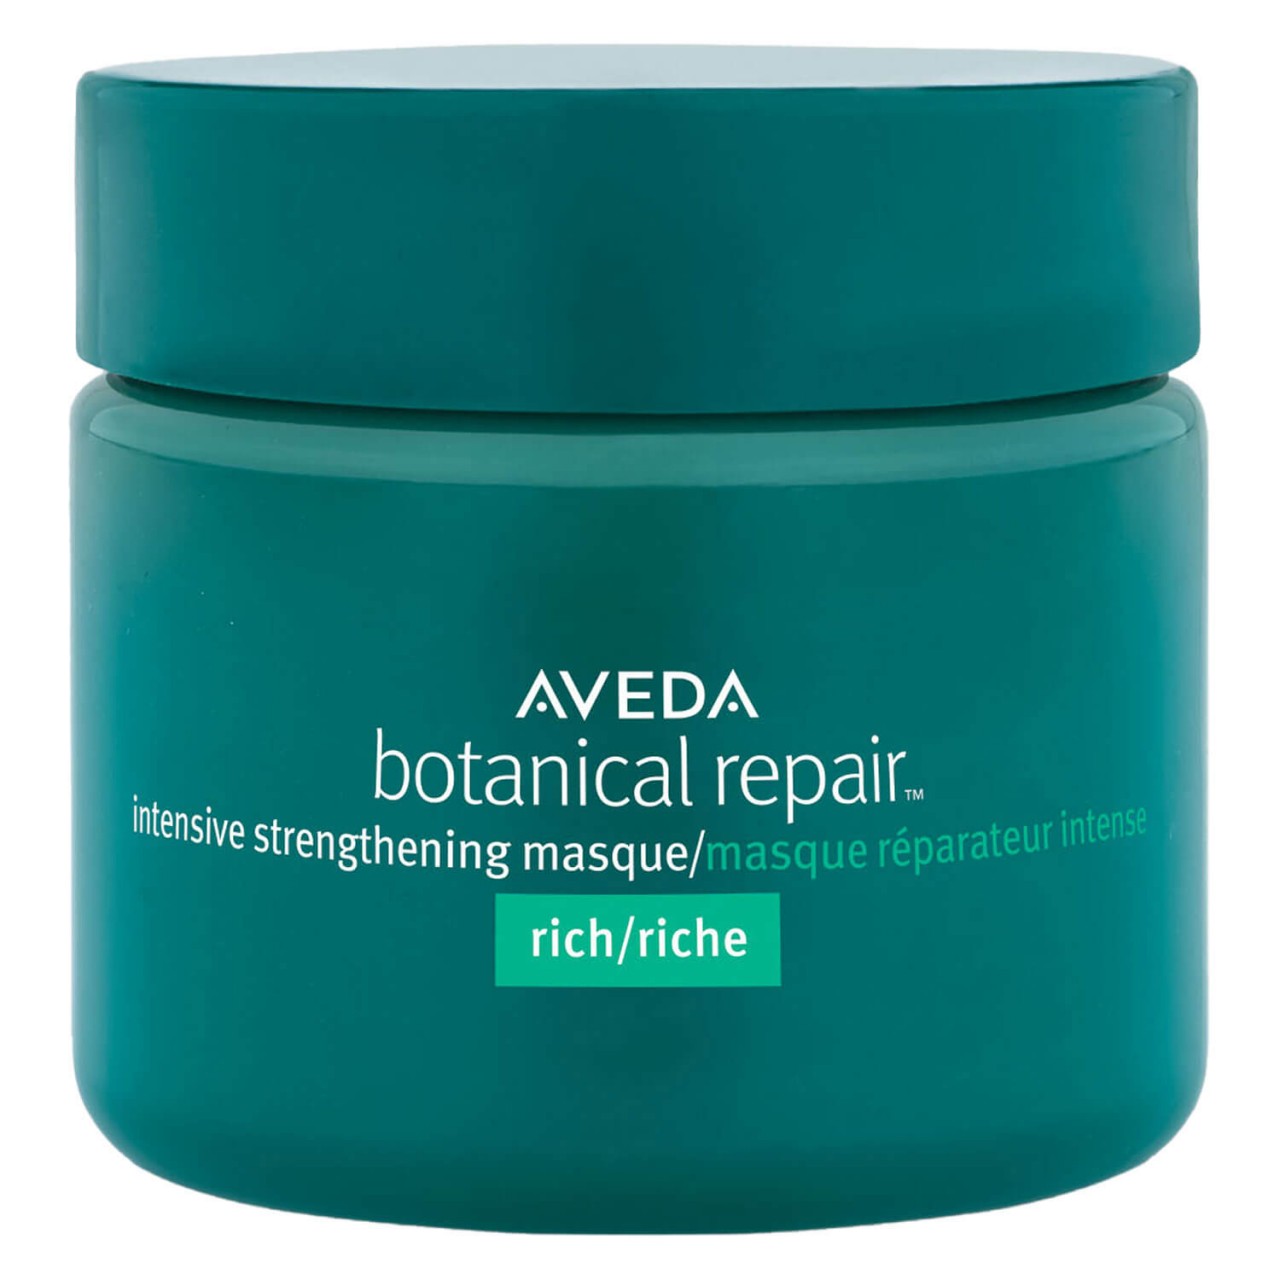 botanical repair - intensive strengthening masque rich von Aveda